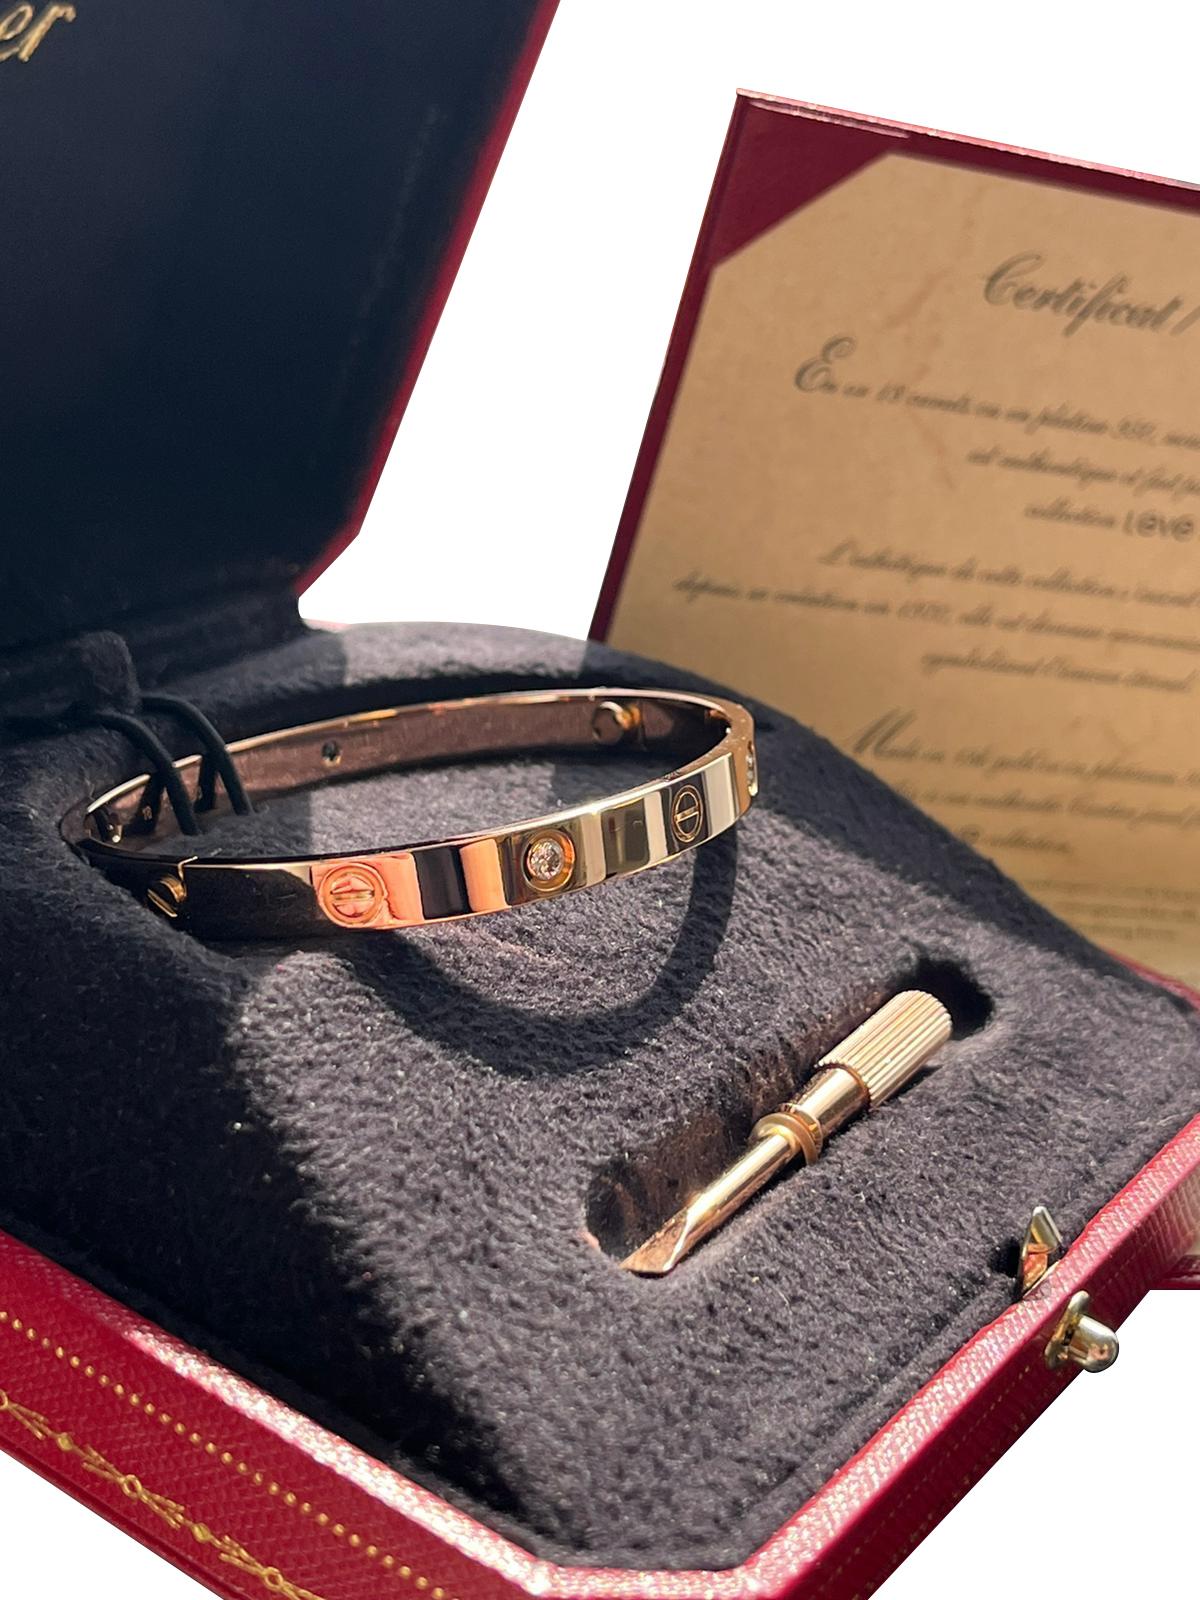 Cartier Love Bracelet 0.42 Carats 4 Brilliant Cut Diamonds 18K Rose Gold Bangle For Sale 1